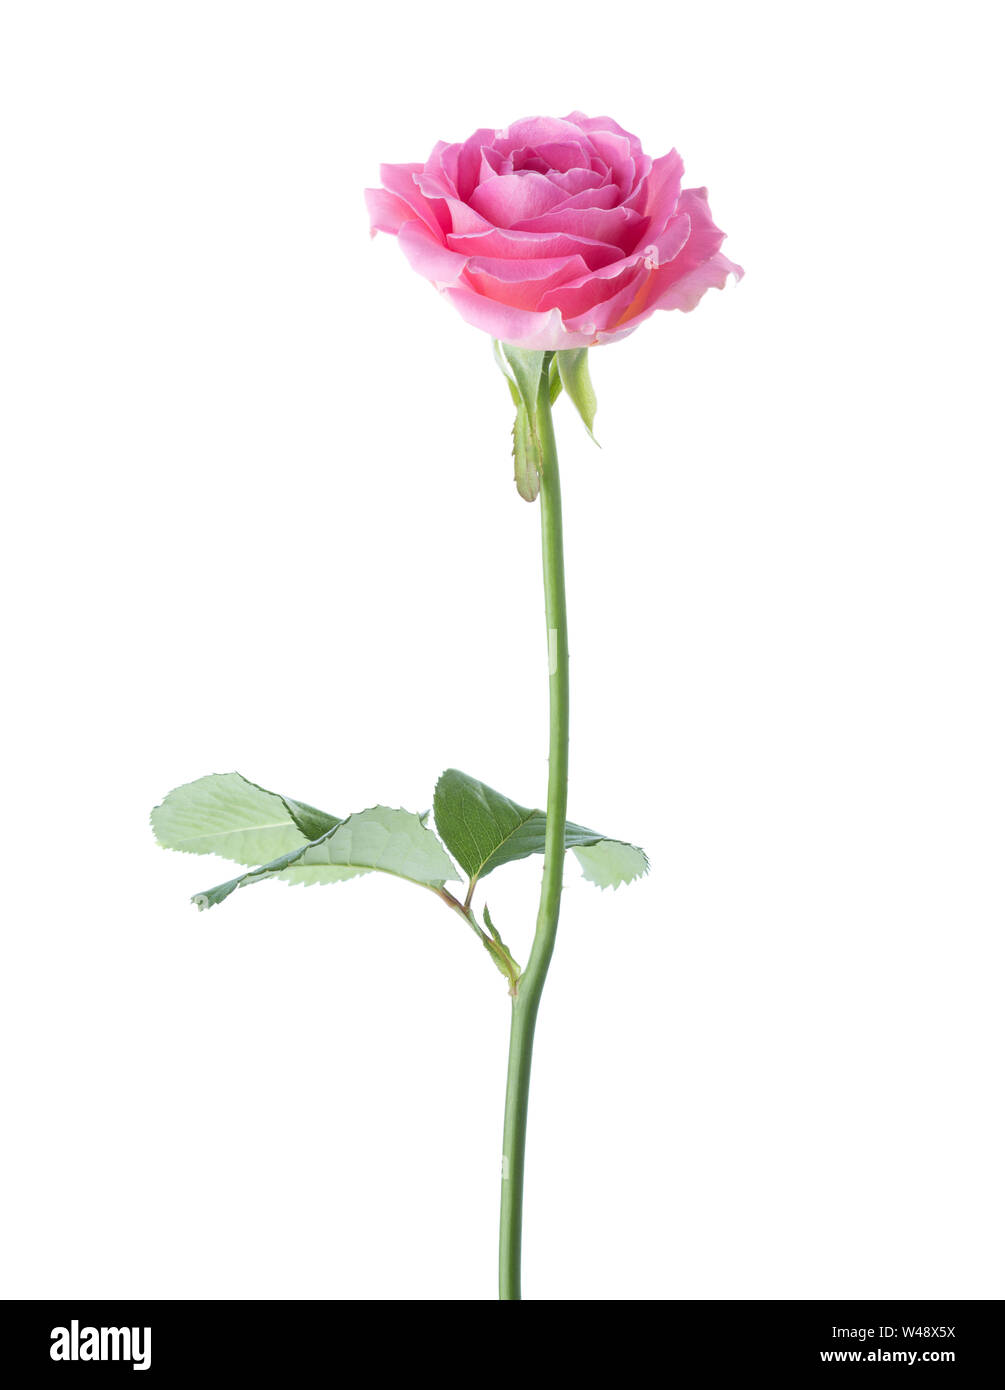 Pink rose isolated on white background. Stock Photo